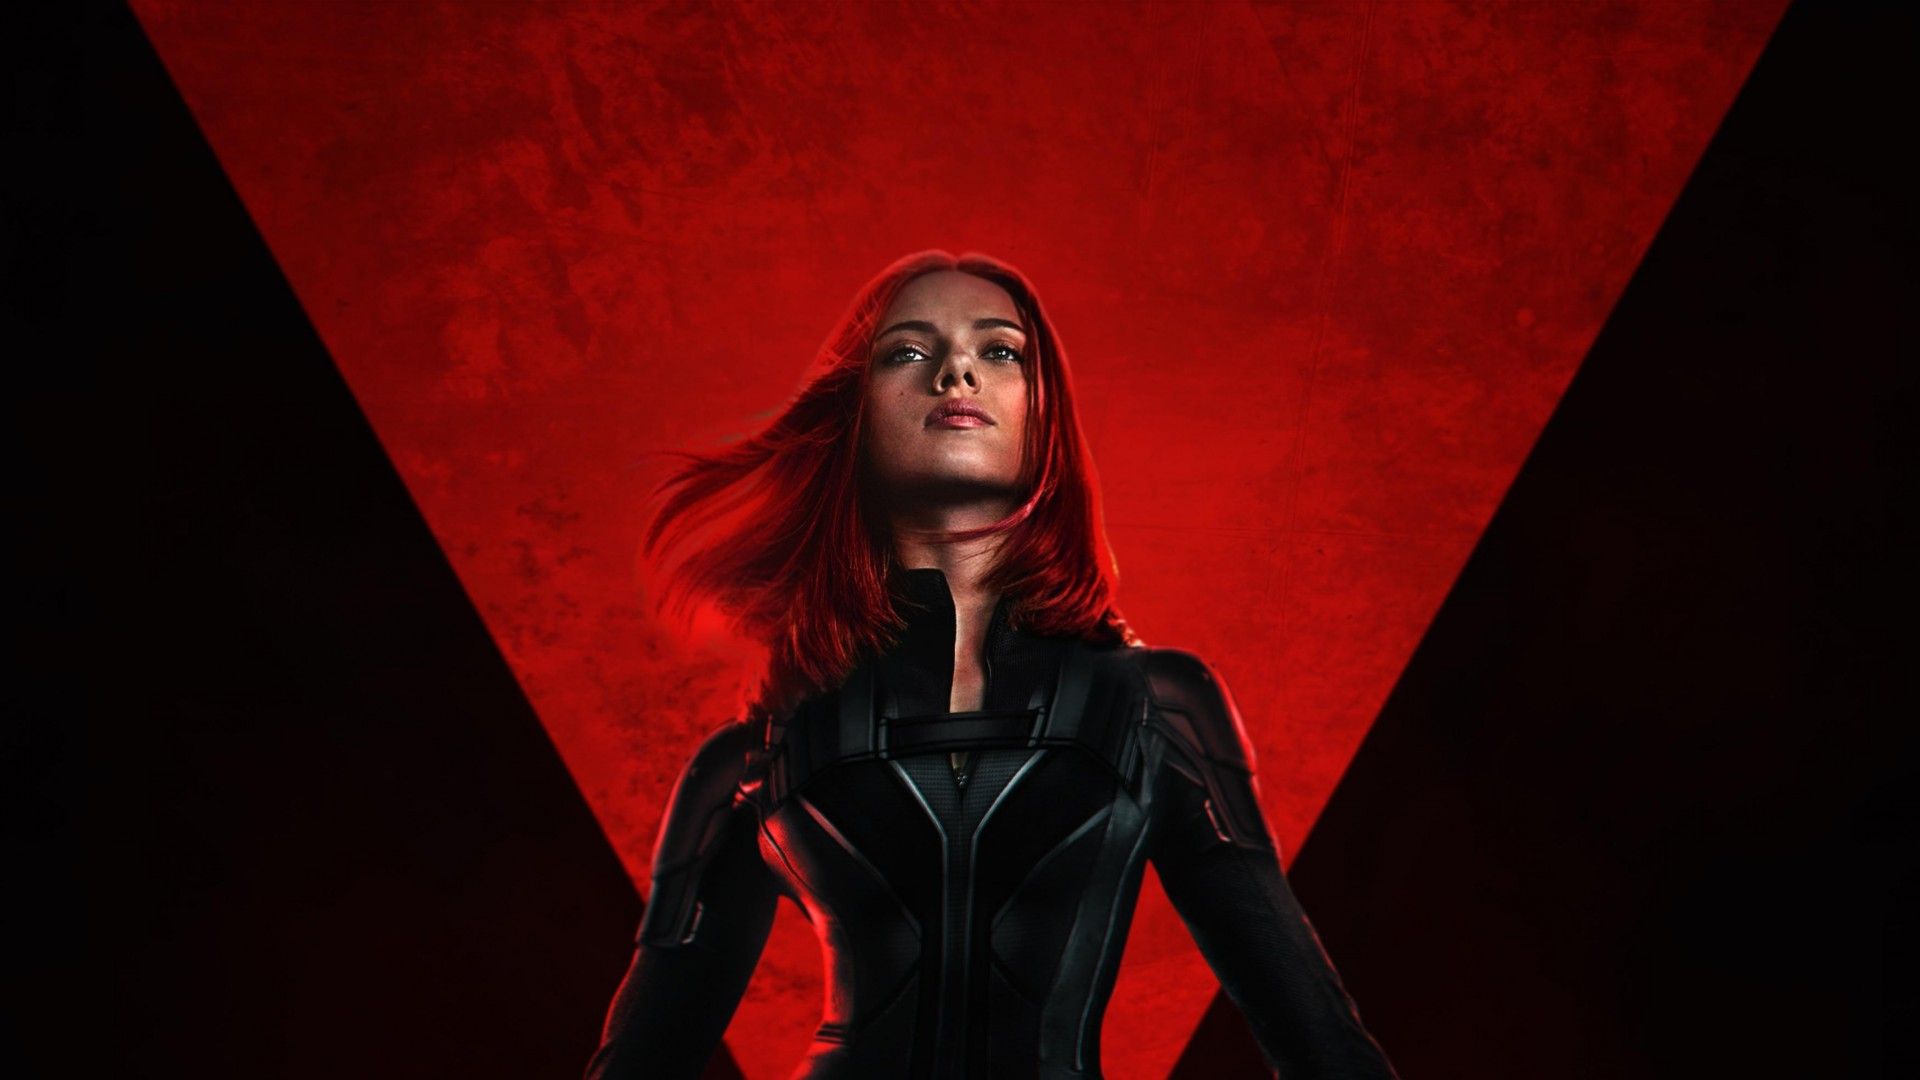 Black Widow 4K Wallpaper, Scarlett Johansson, Marvel Comics, 2020 Movies, Movies